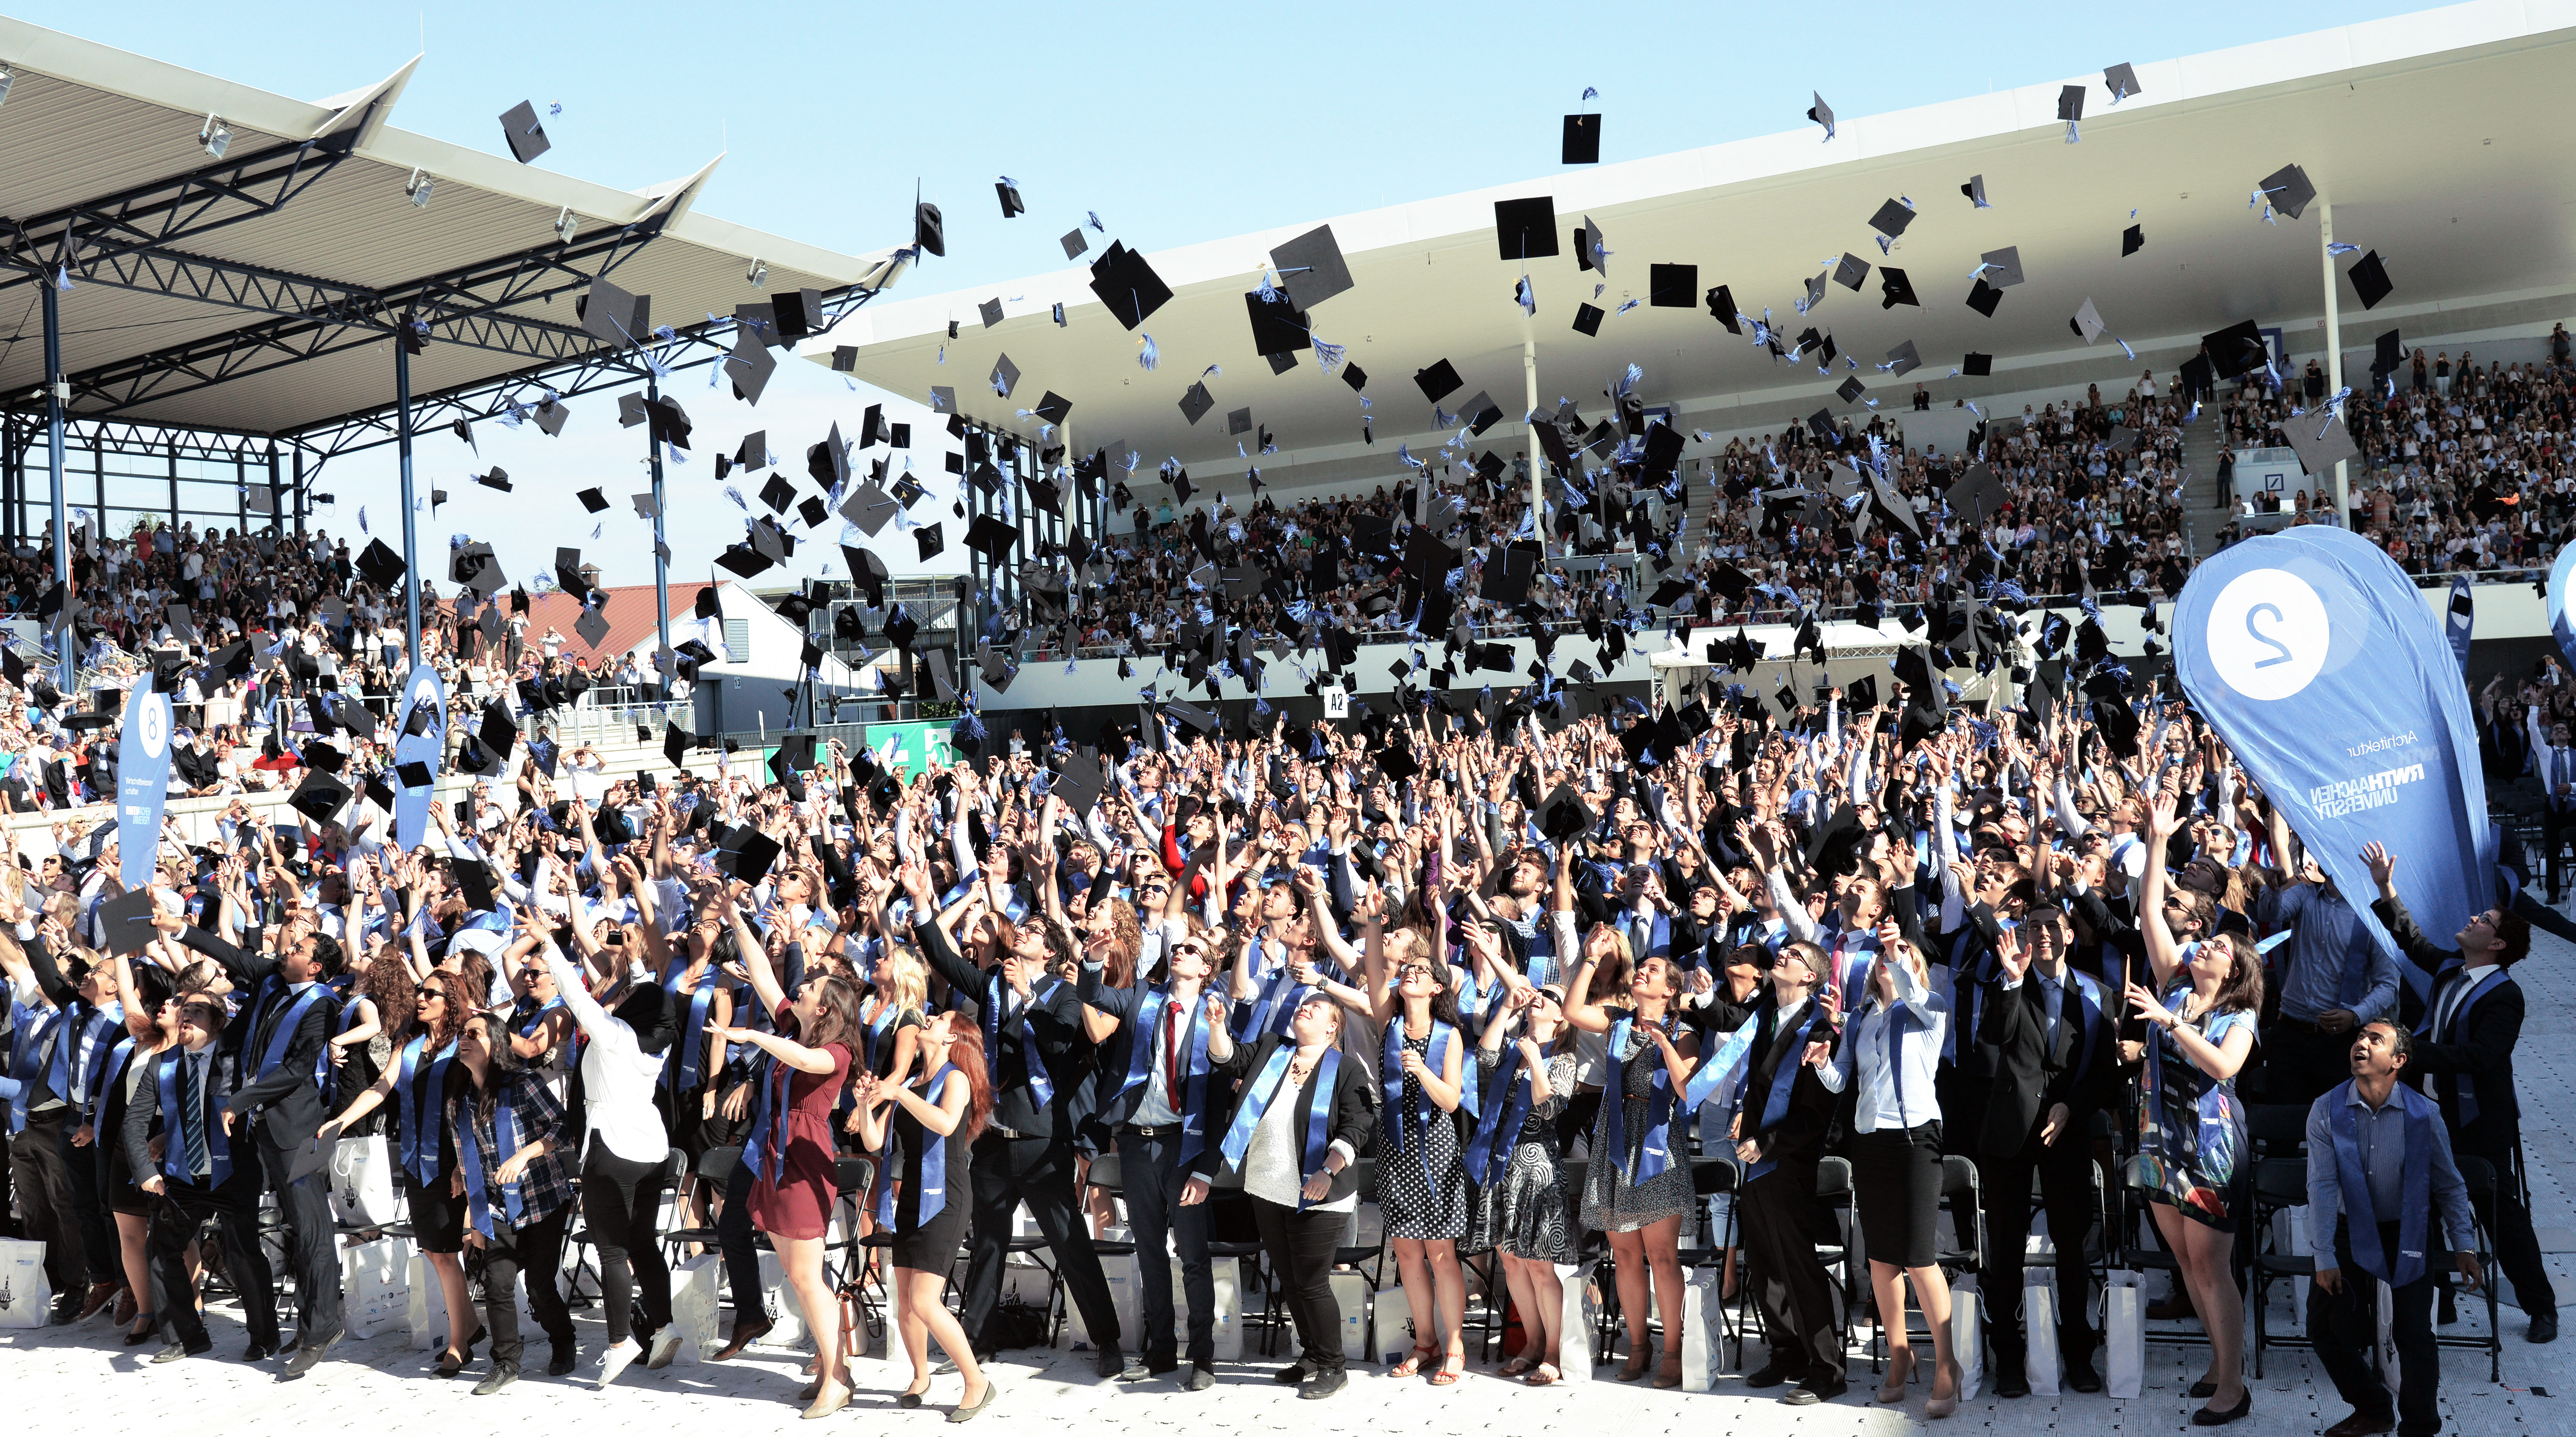 More than 110,000 graduates